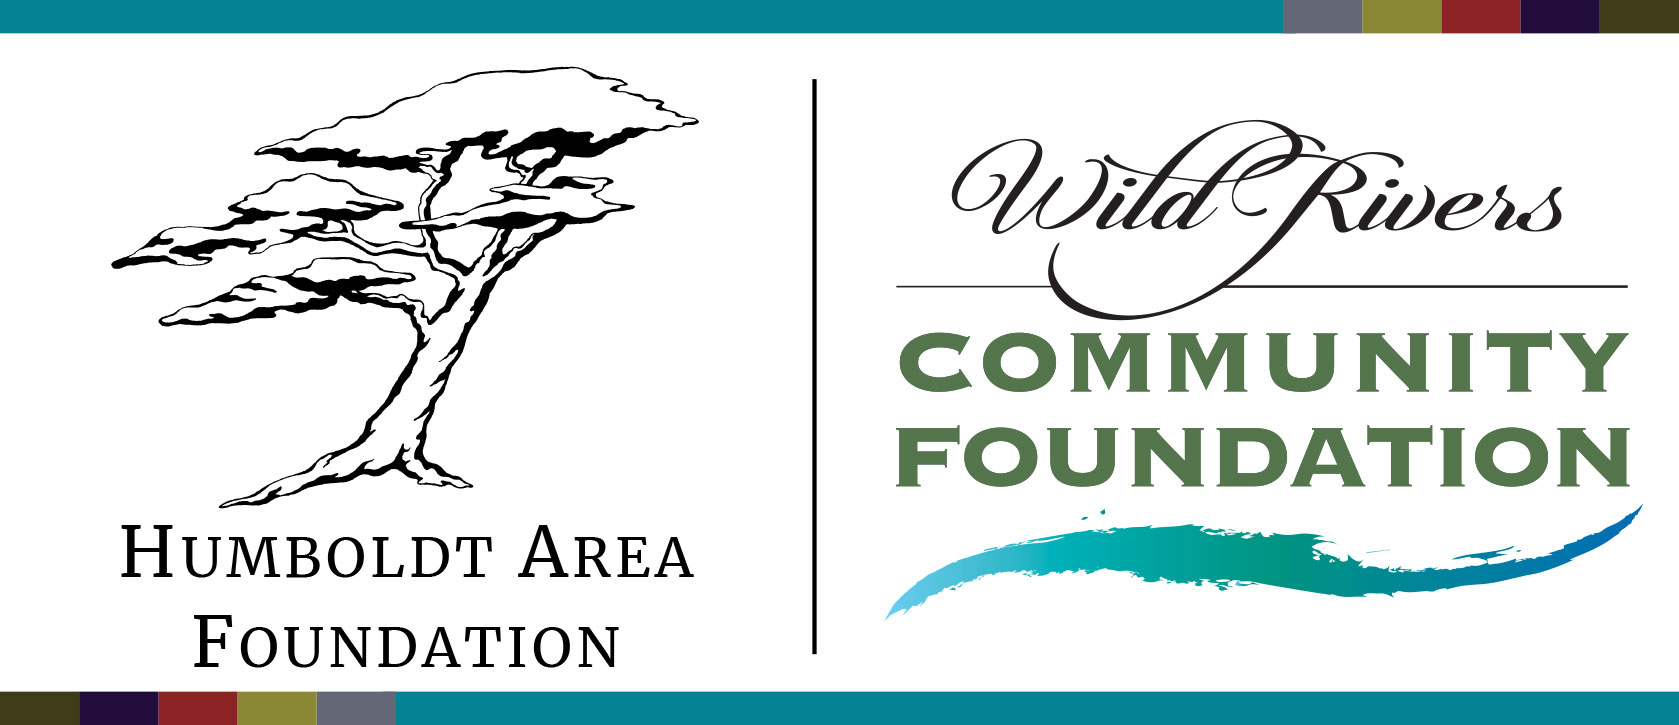 Humboldt Area Foundation & Wild Rivers Community Foundation logo